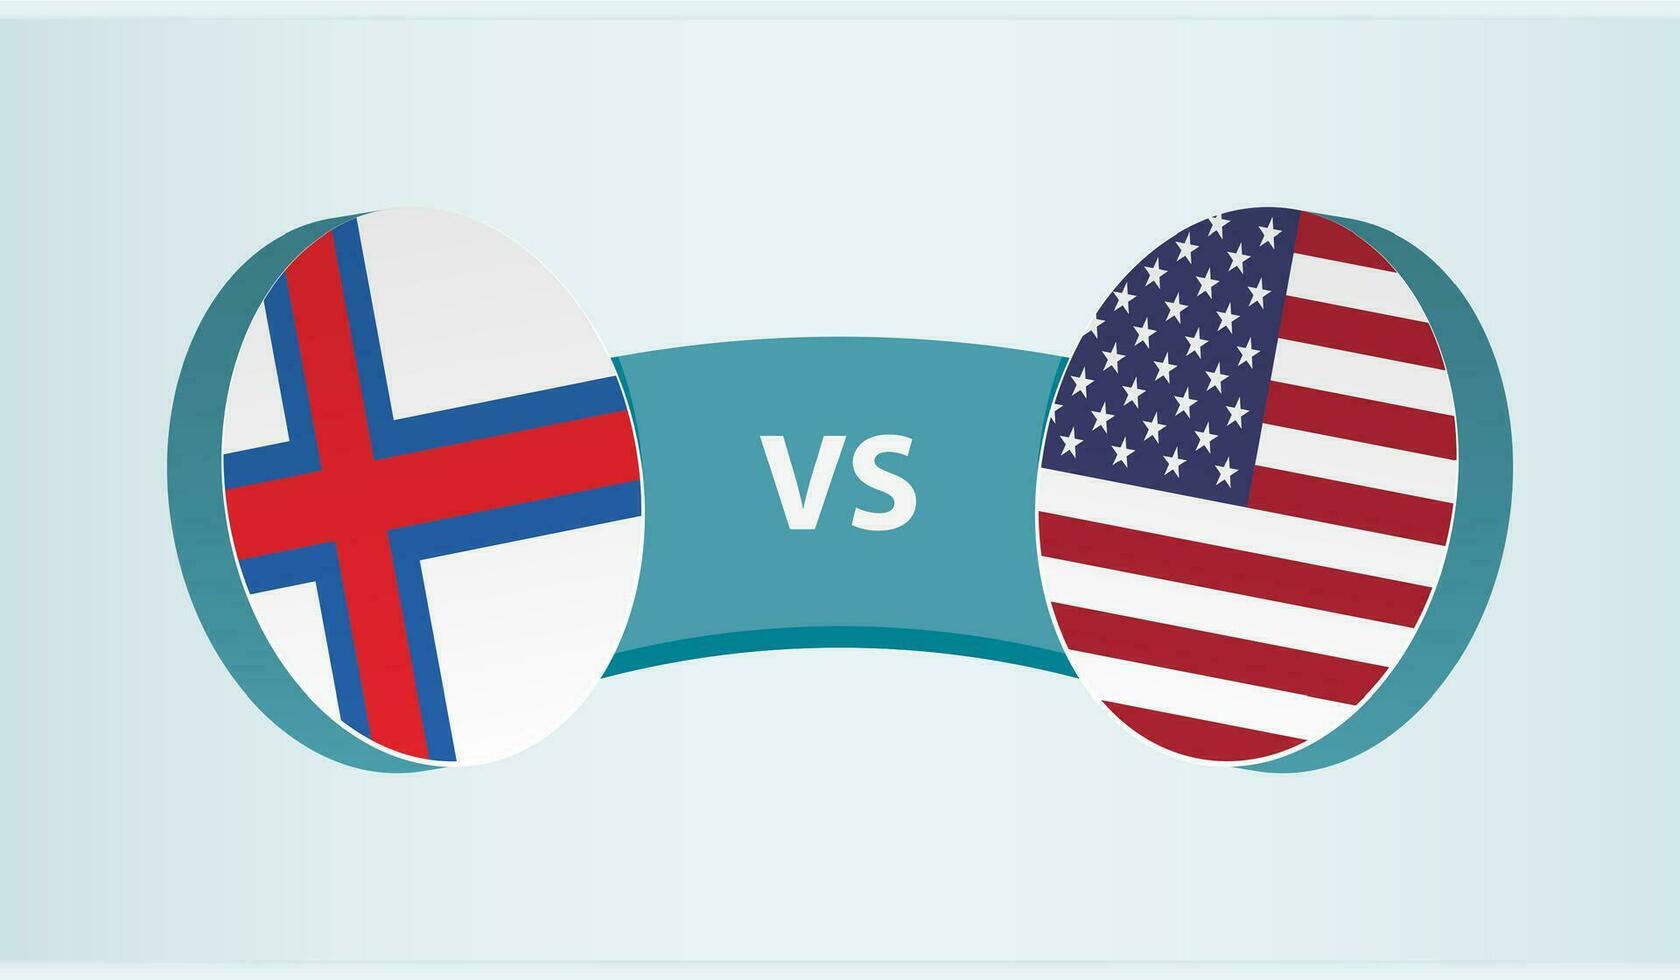 Faroe Islands versus USA, team sports competition concept. vector